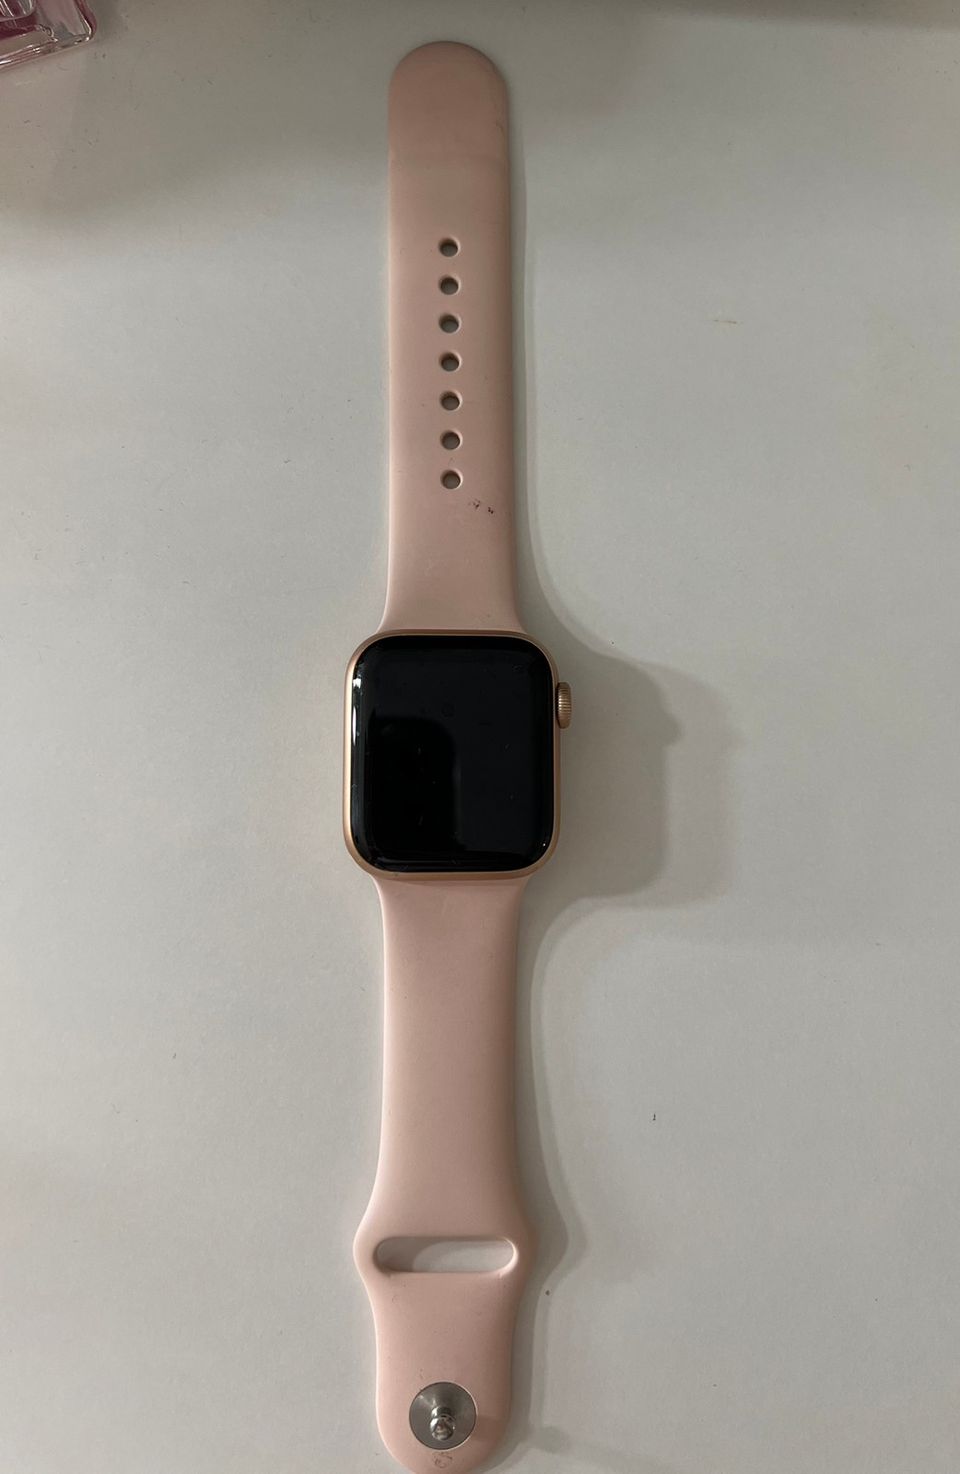 Apple watch Series 6